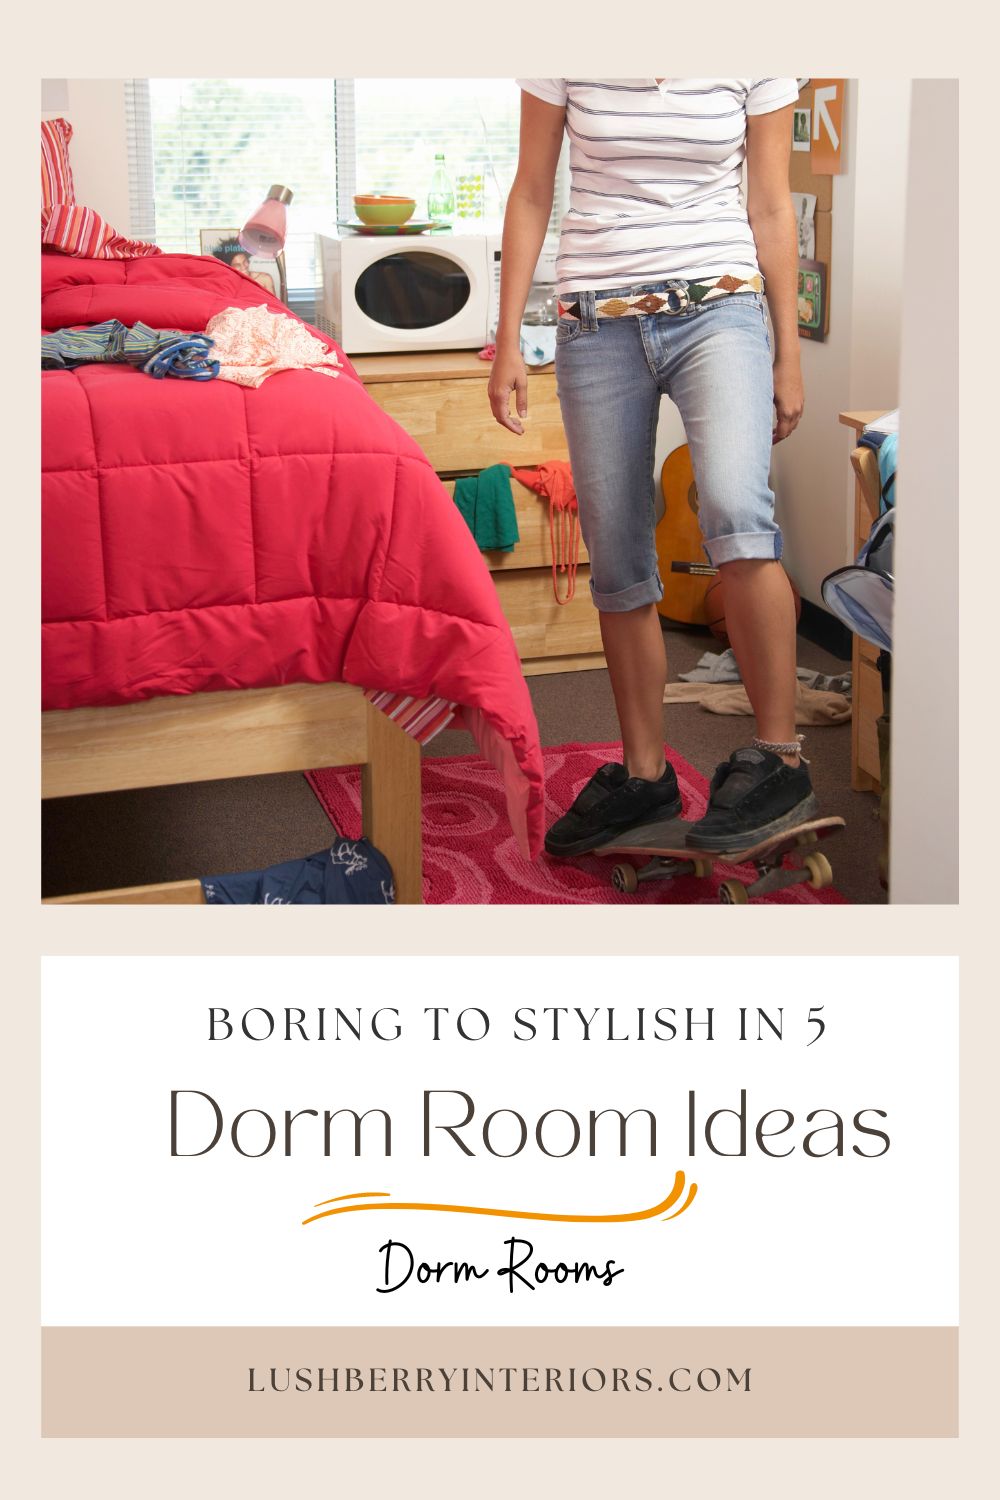 Dorm Room Ideas - 5 Inspiring Ways to Decorate